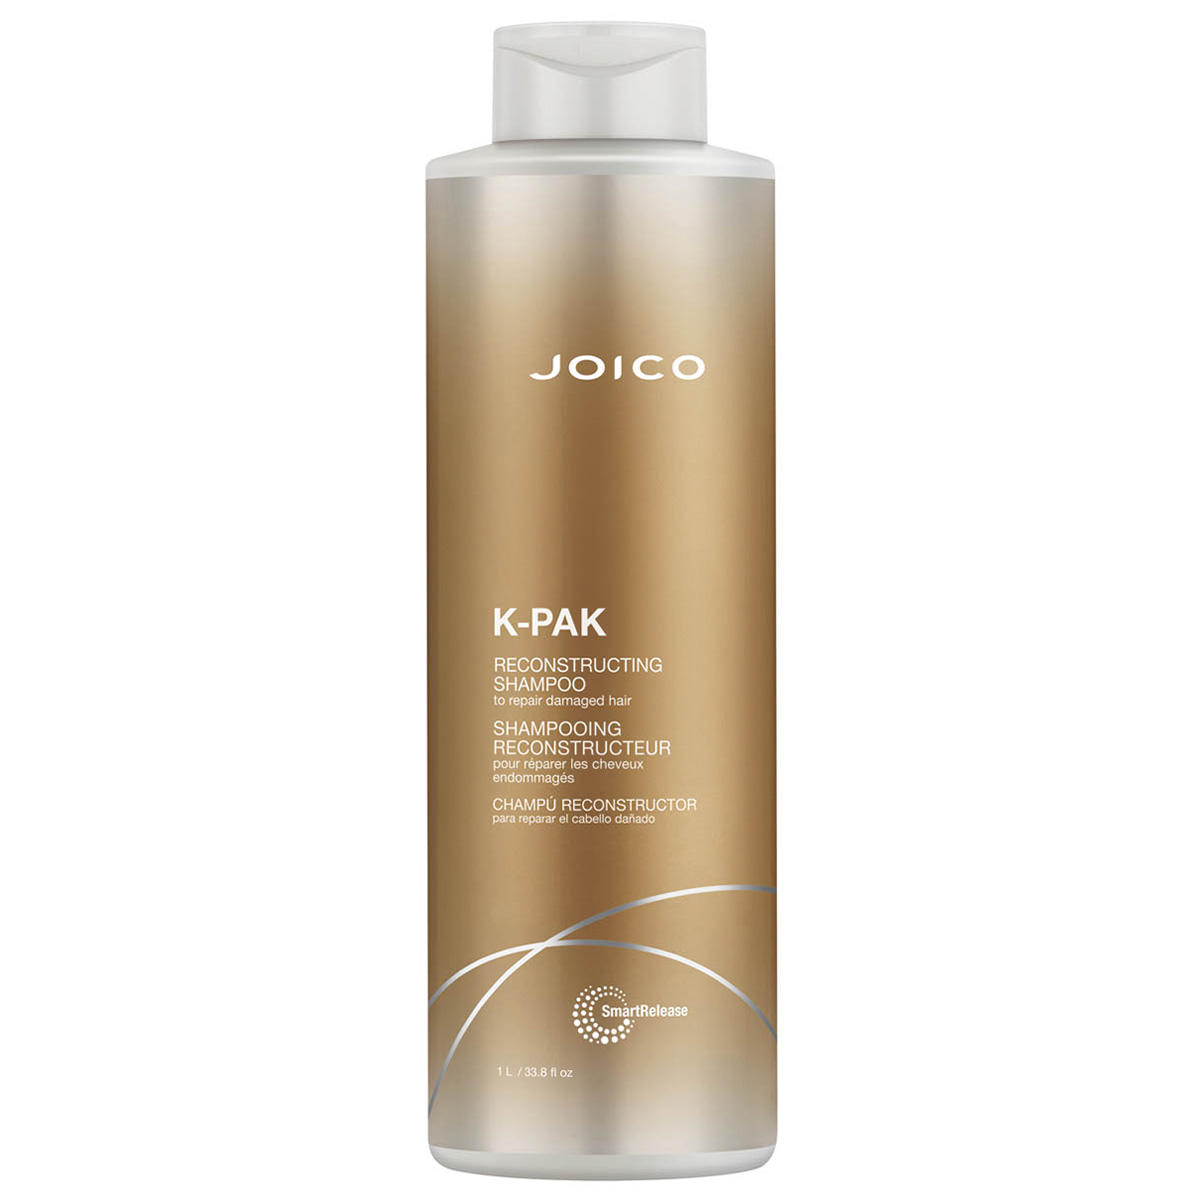 JOICO K-PAK Reconstructing Shampoo 1 Liter - 1